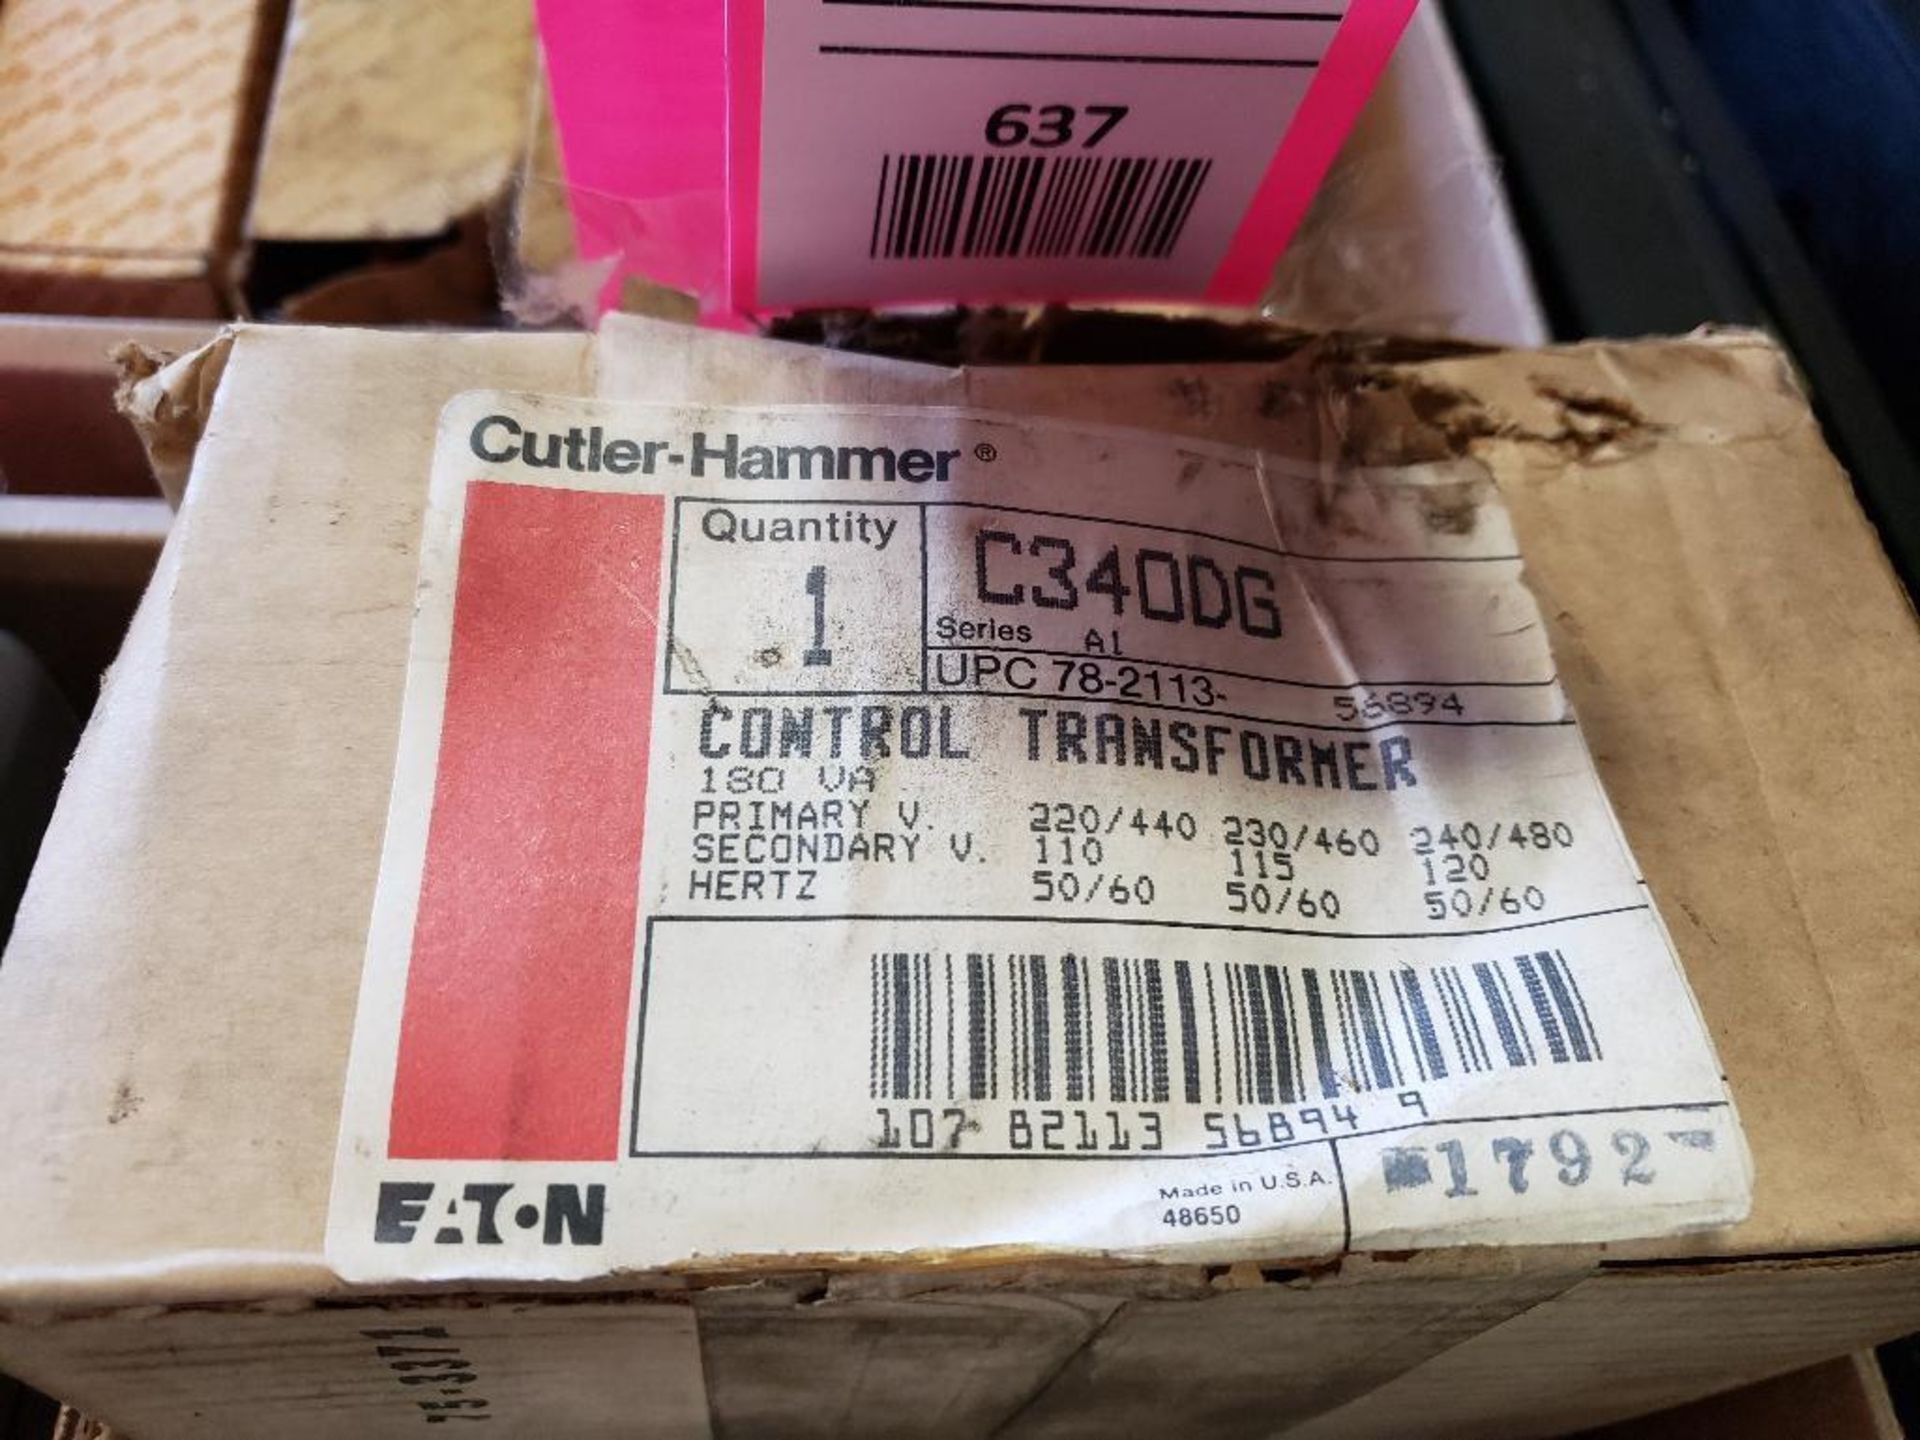 Eaton Culter Hammer control transformer. Model C340DG. New in box. - Image 3 of 3